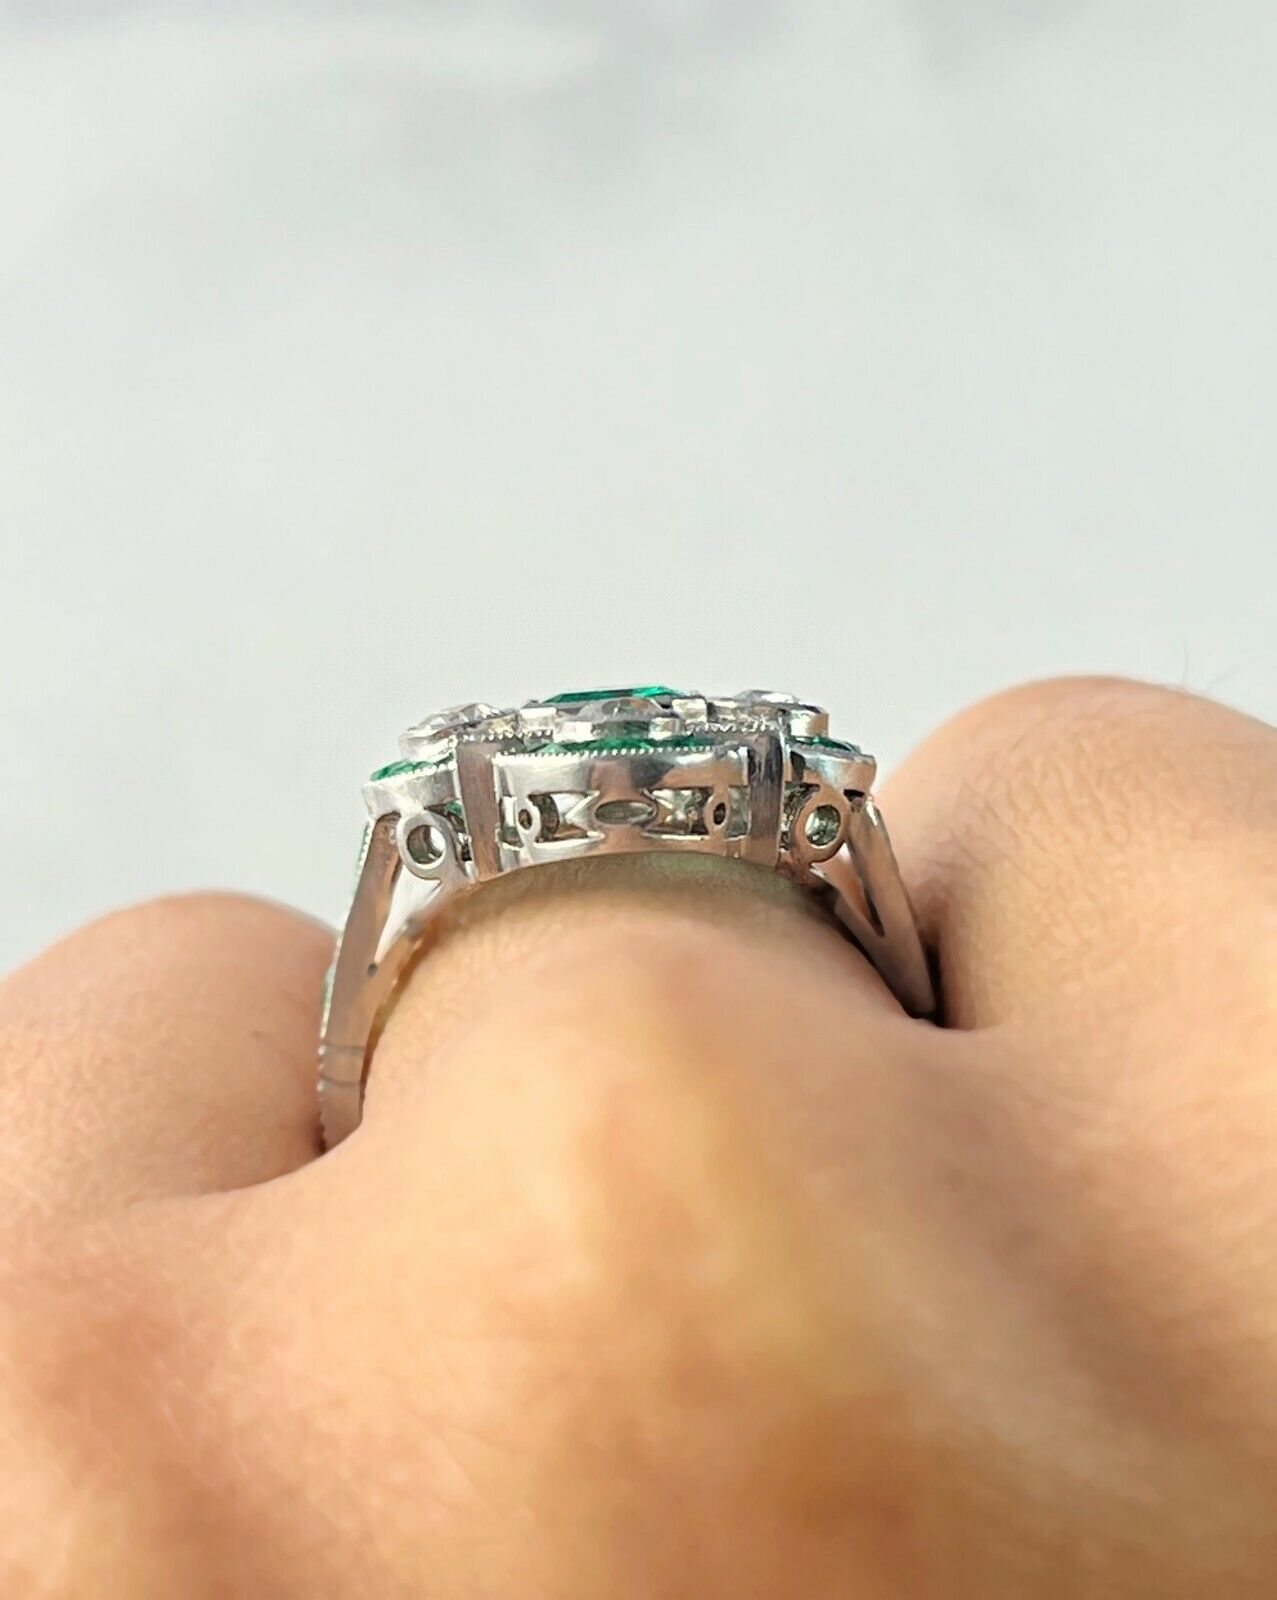 Art Deco Diamond Emerald Platinum Ring Handmade Certified Natural